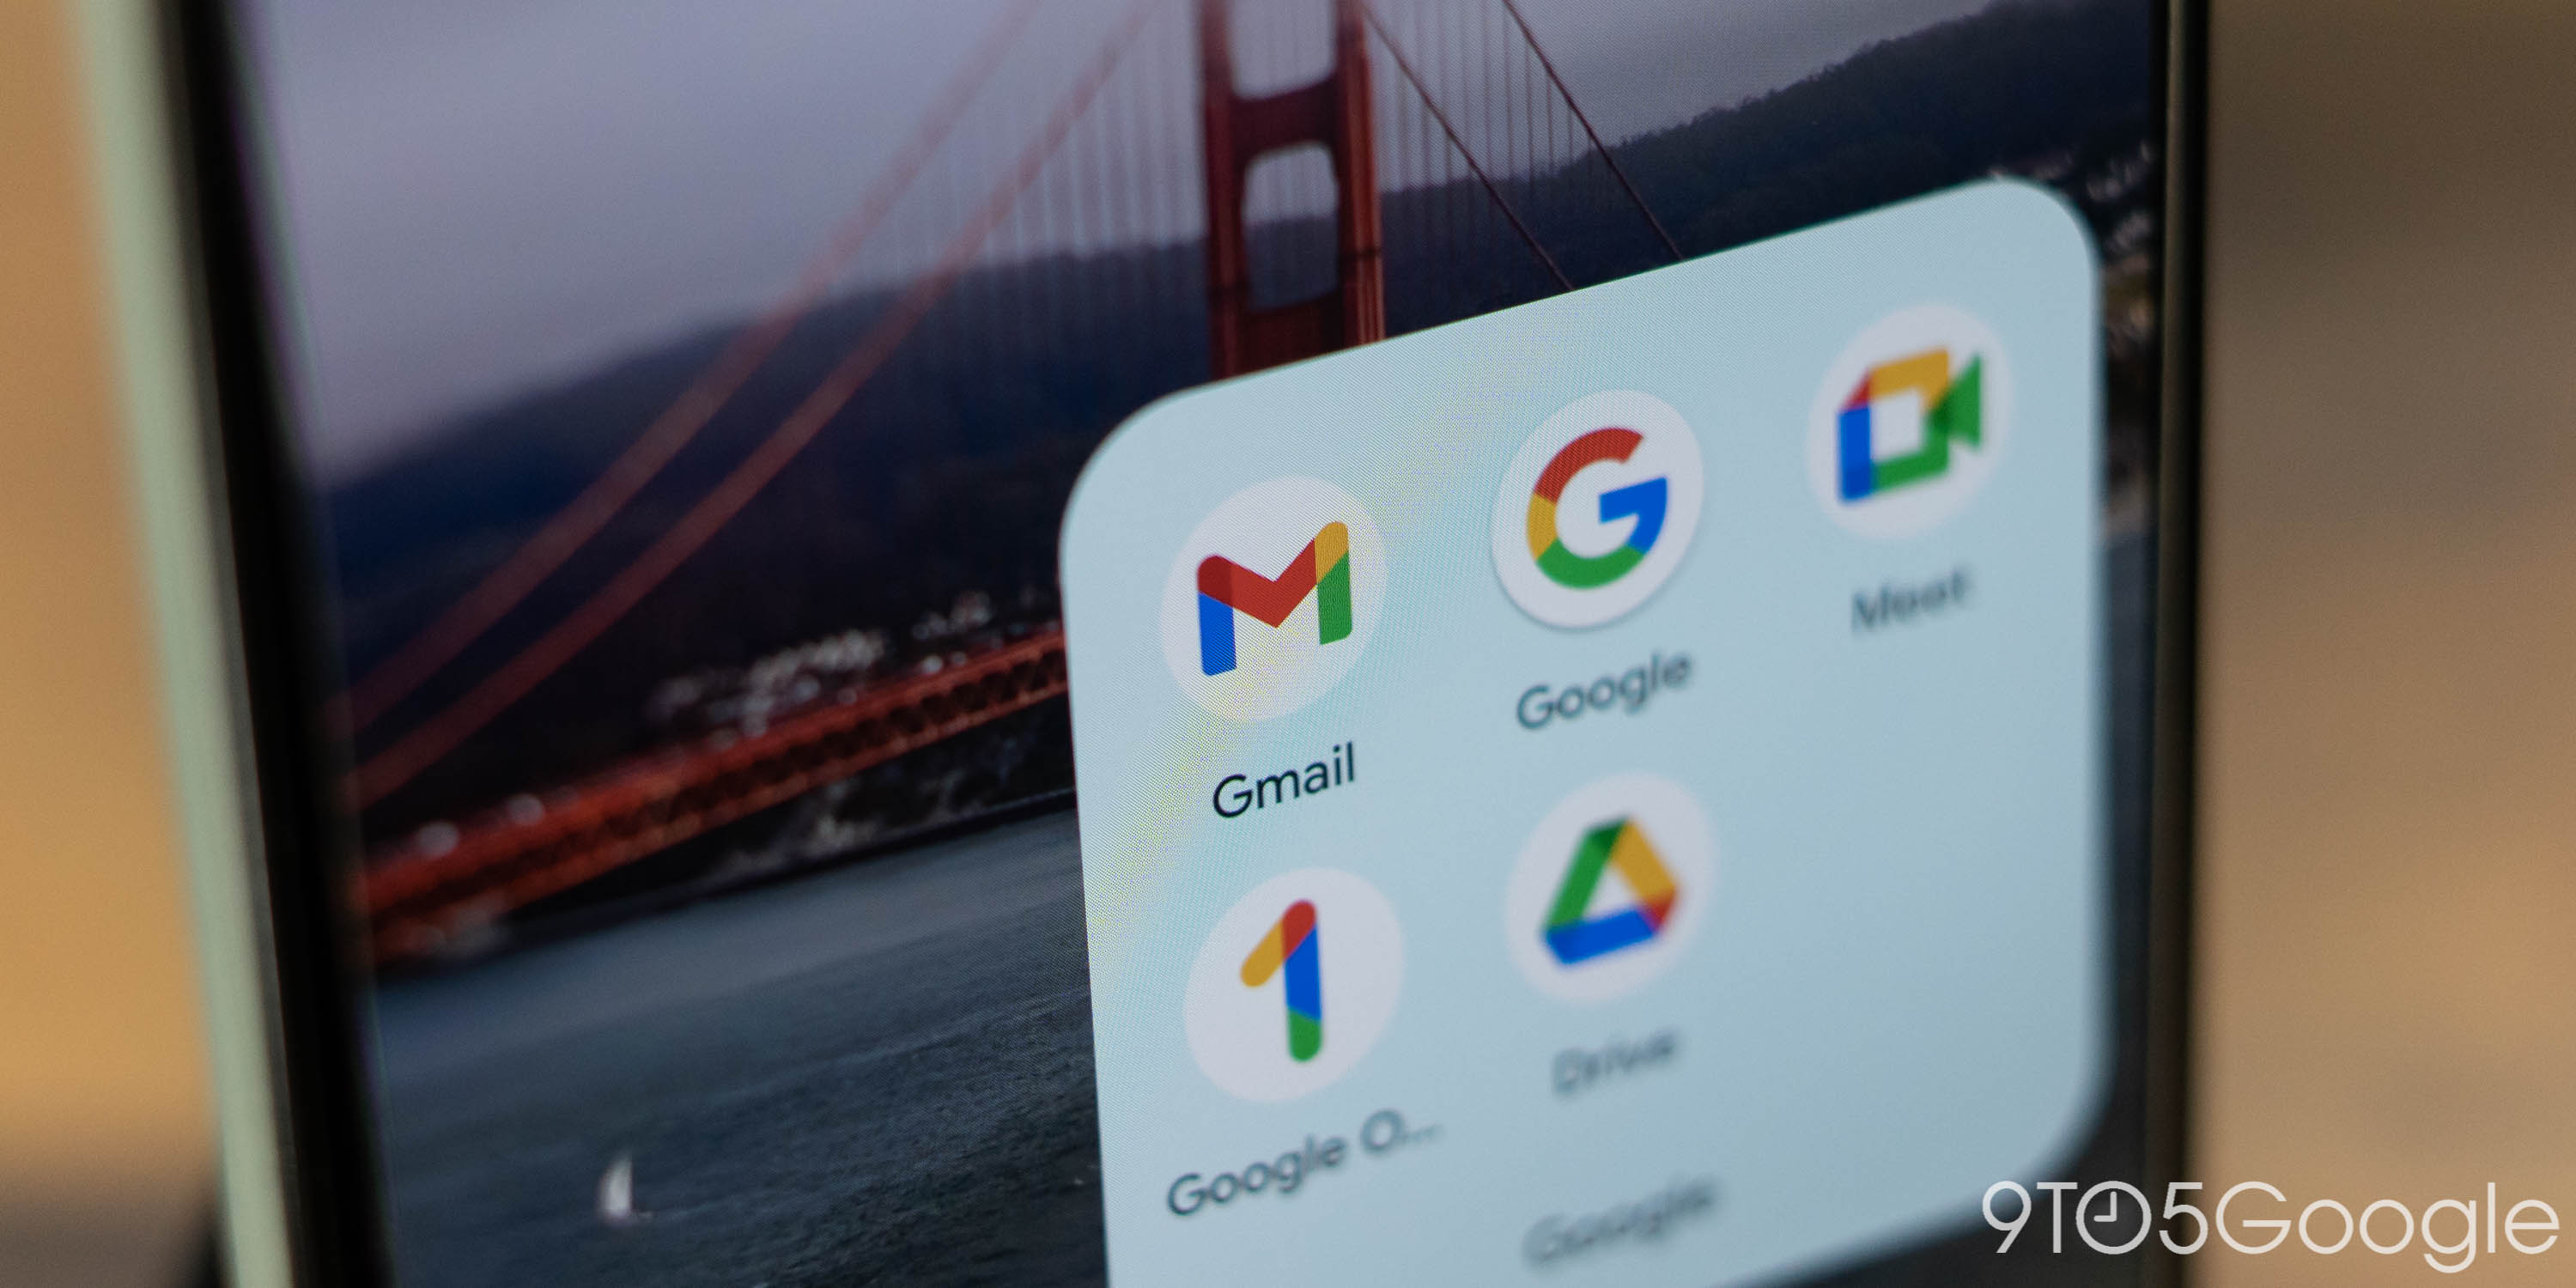 Gmail reaches 10 billion Google Play Store downloads